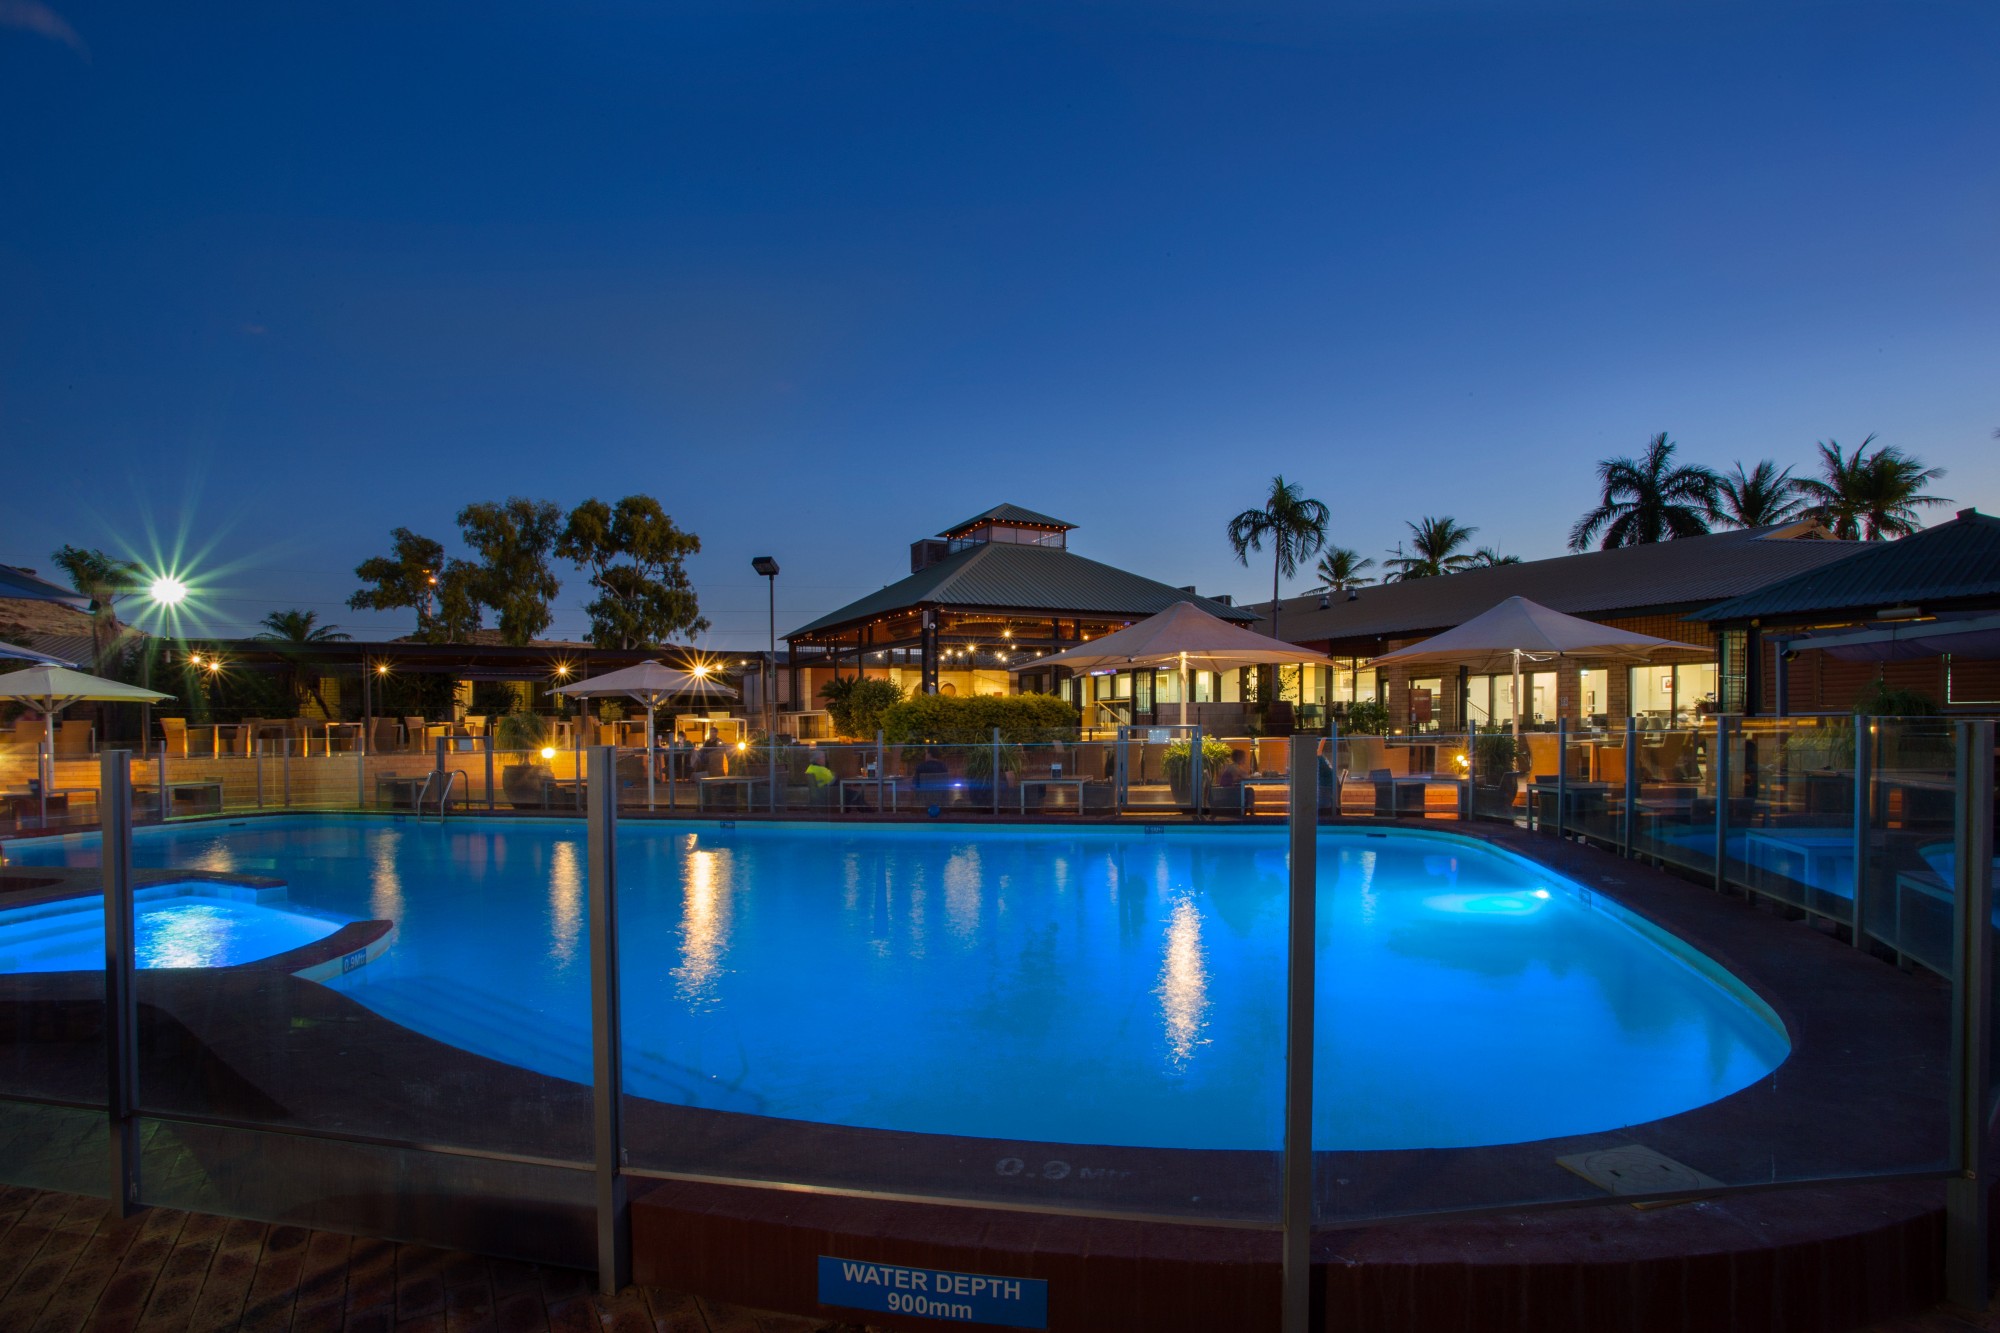 The pool at Karratha International Hotel